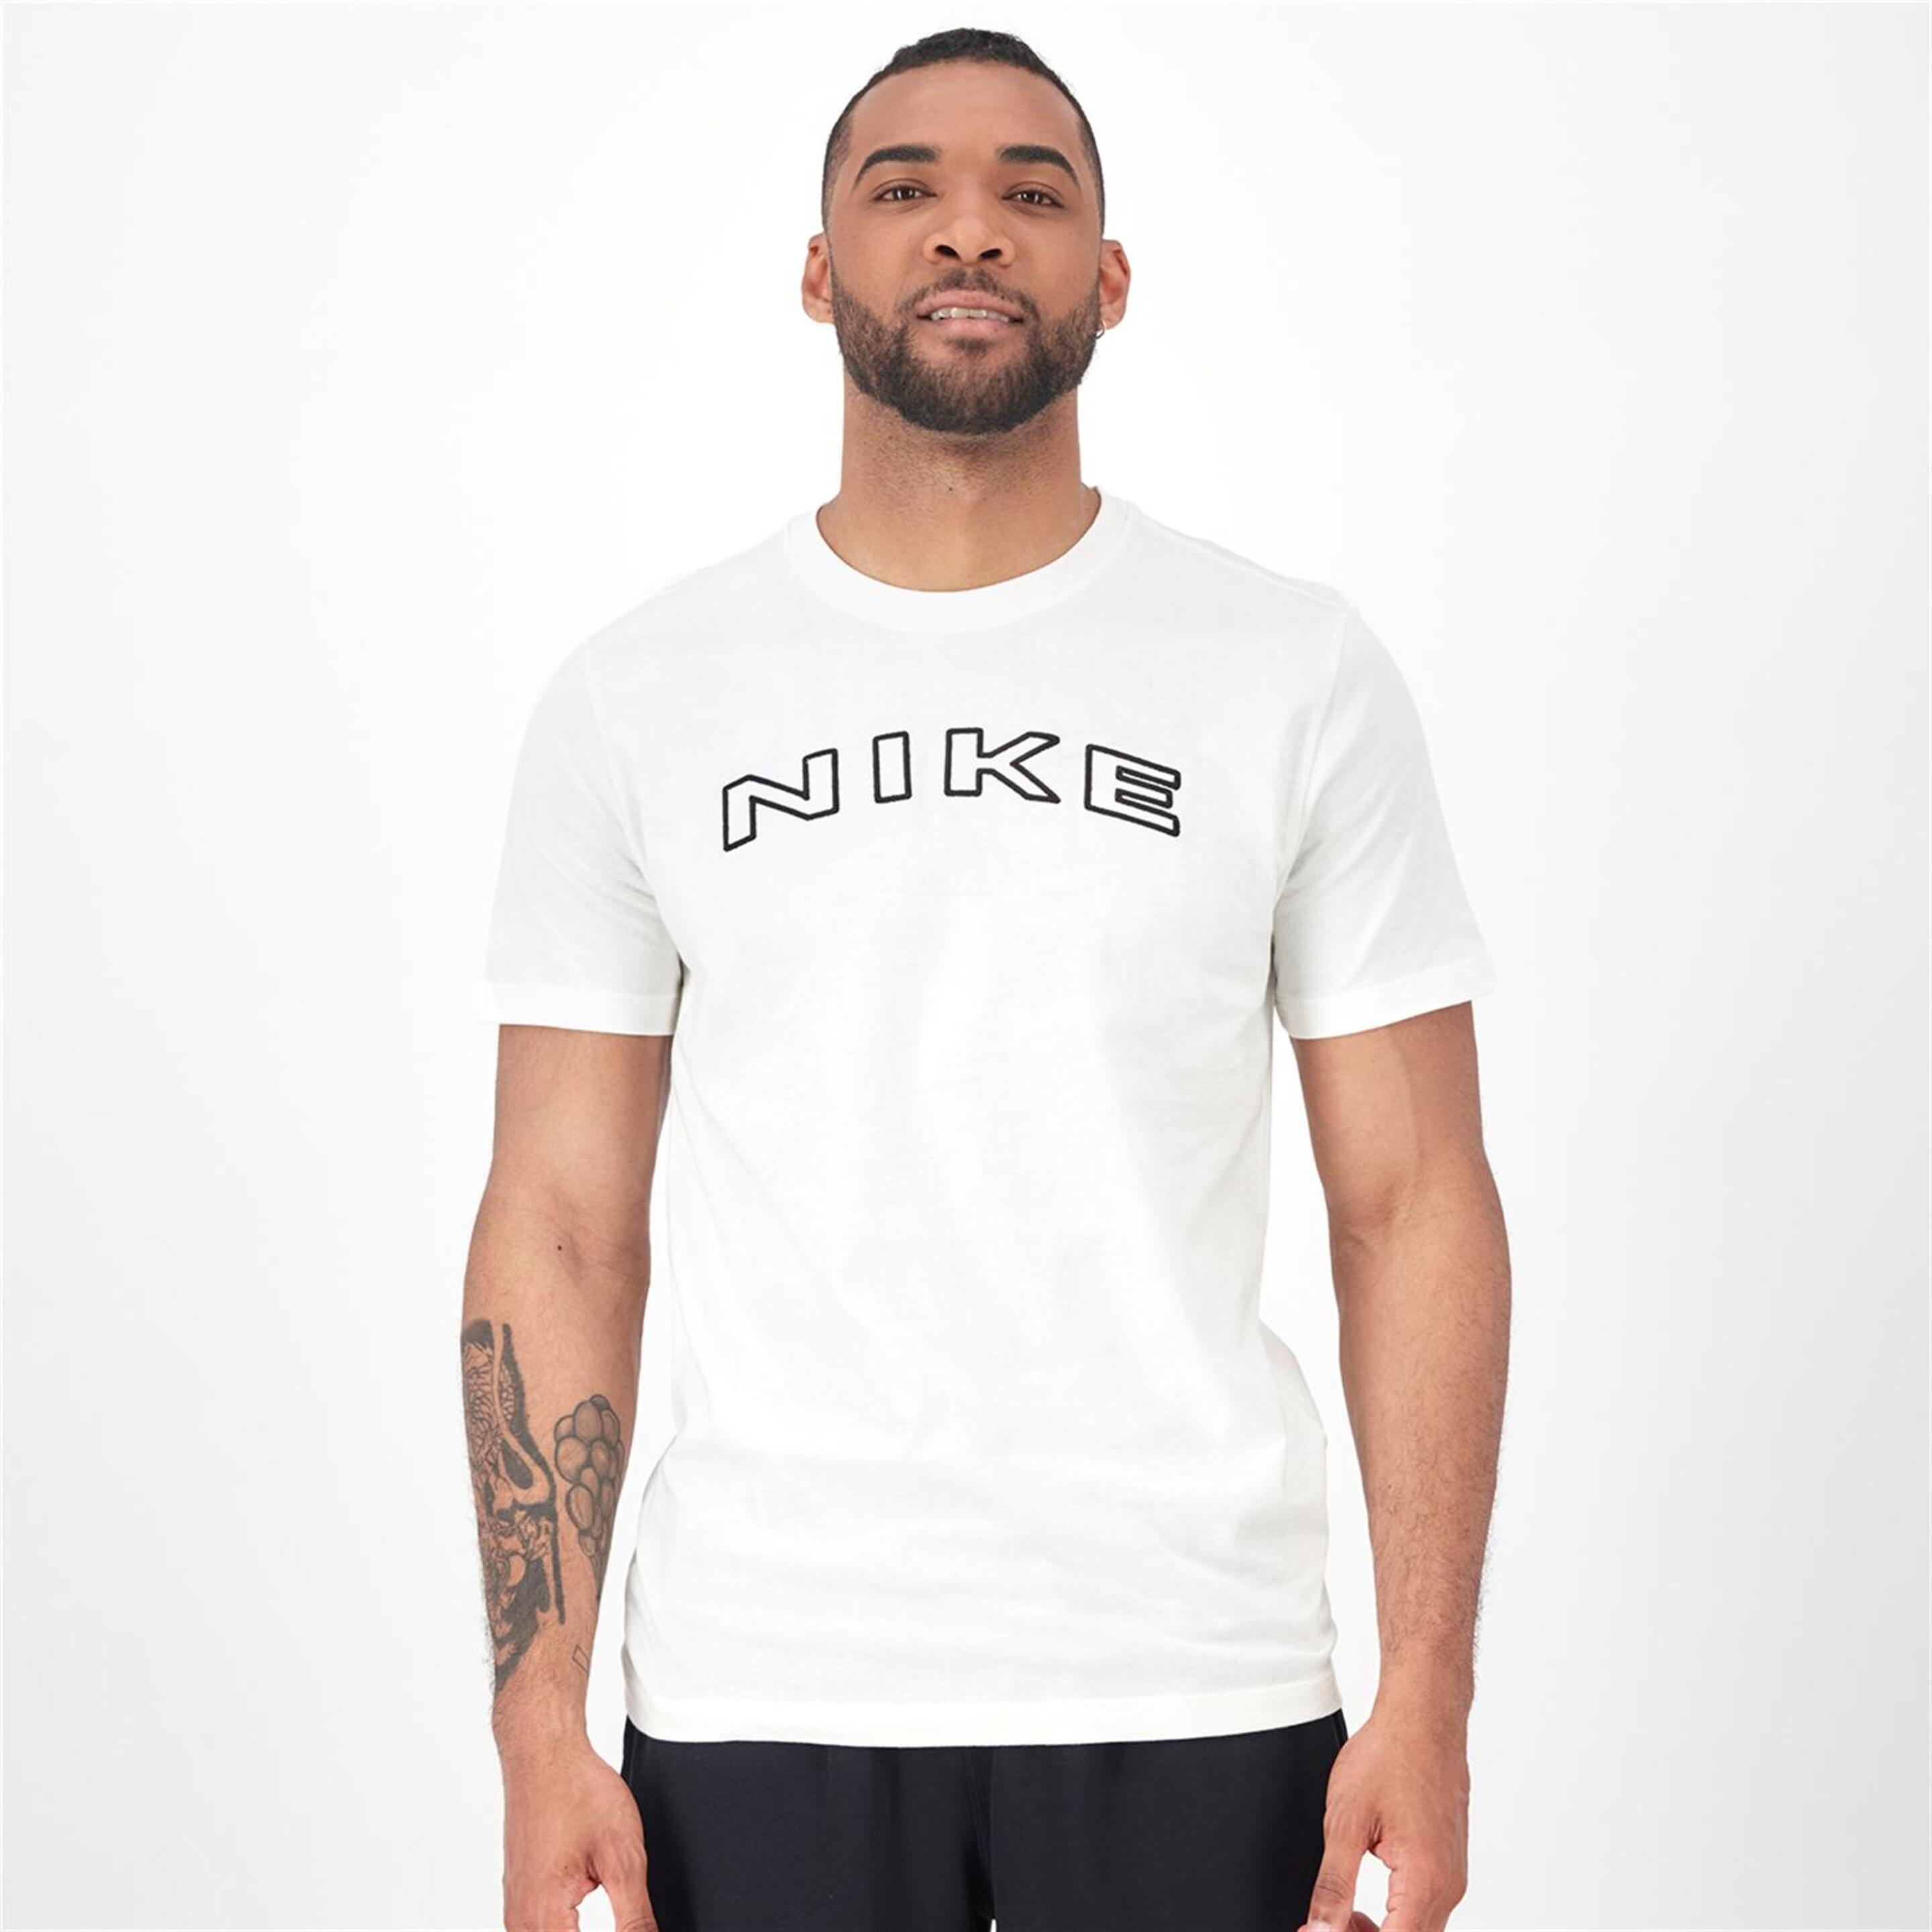 Nike Hbr - blanco - Camiseta Hombre